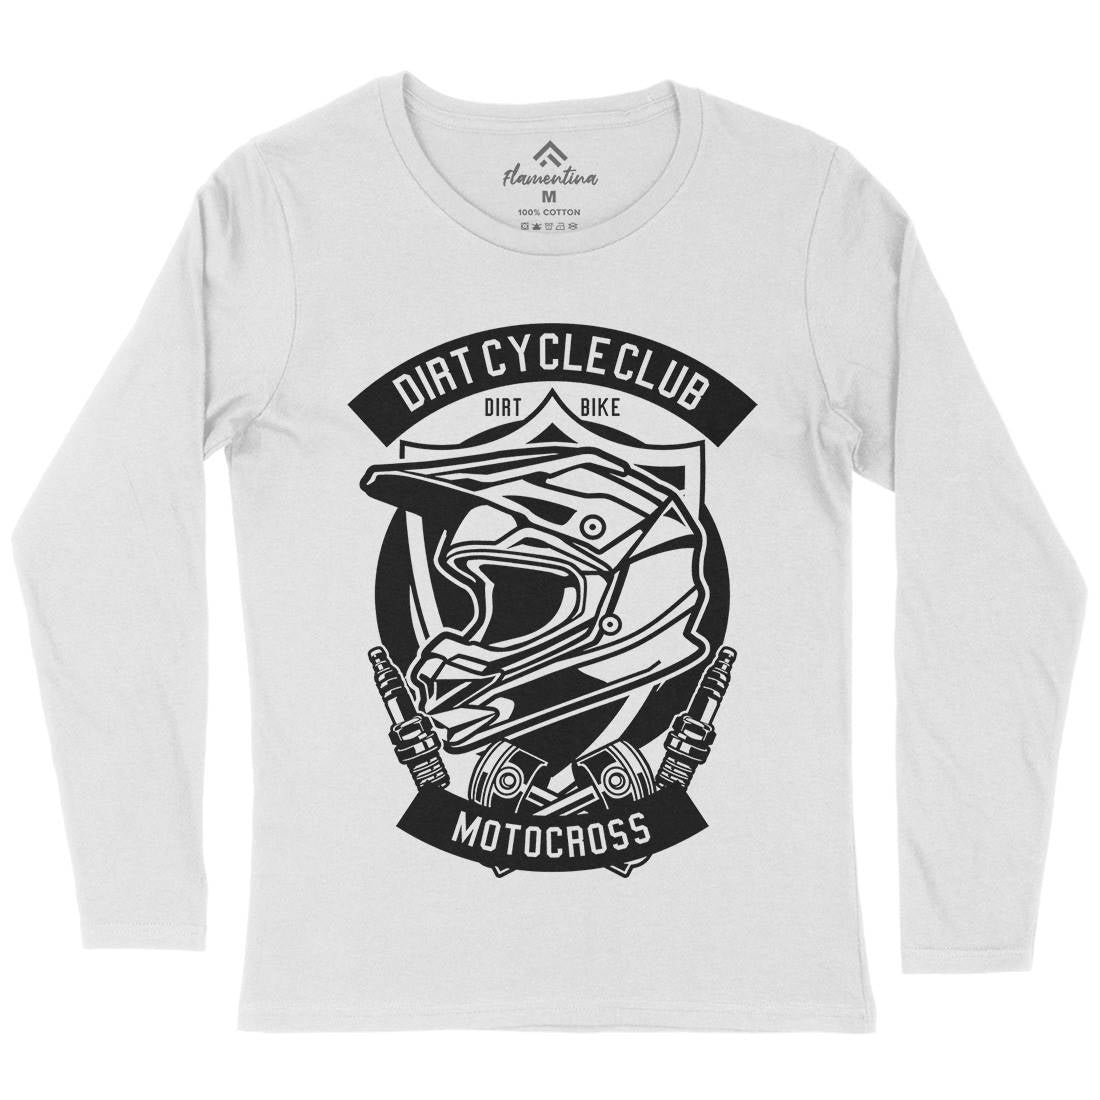 Dirty Cycle Club Womens Long Sleeve T-Shirt Motorcycles B532